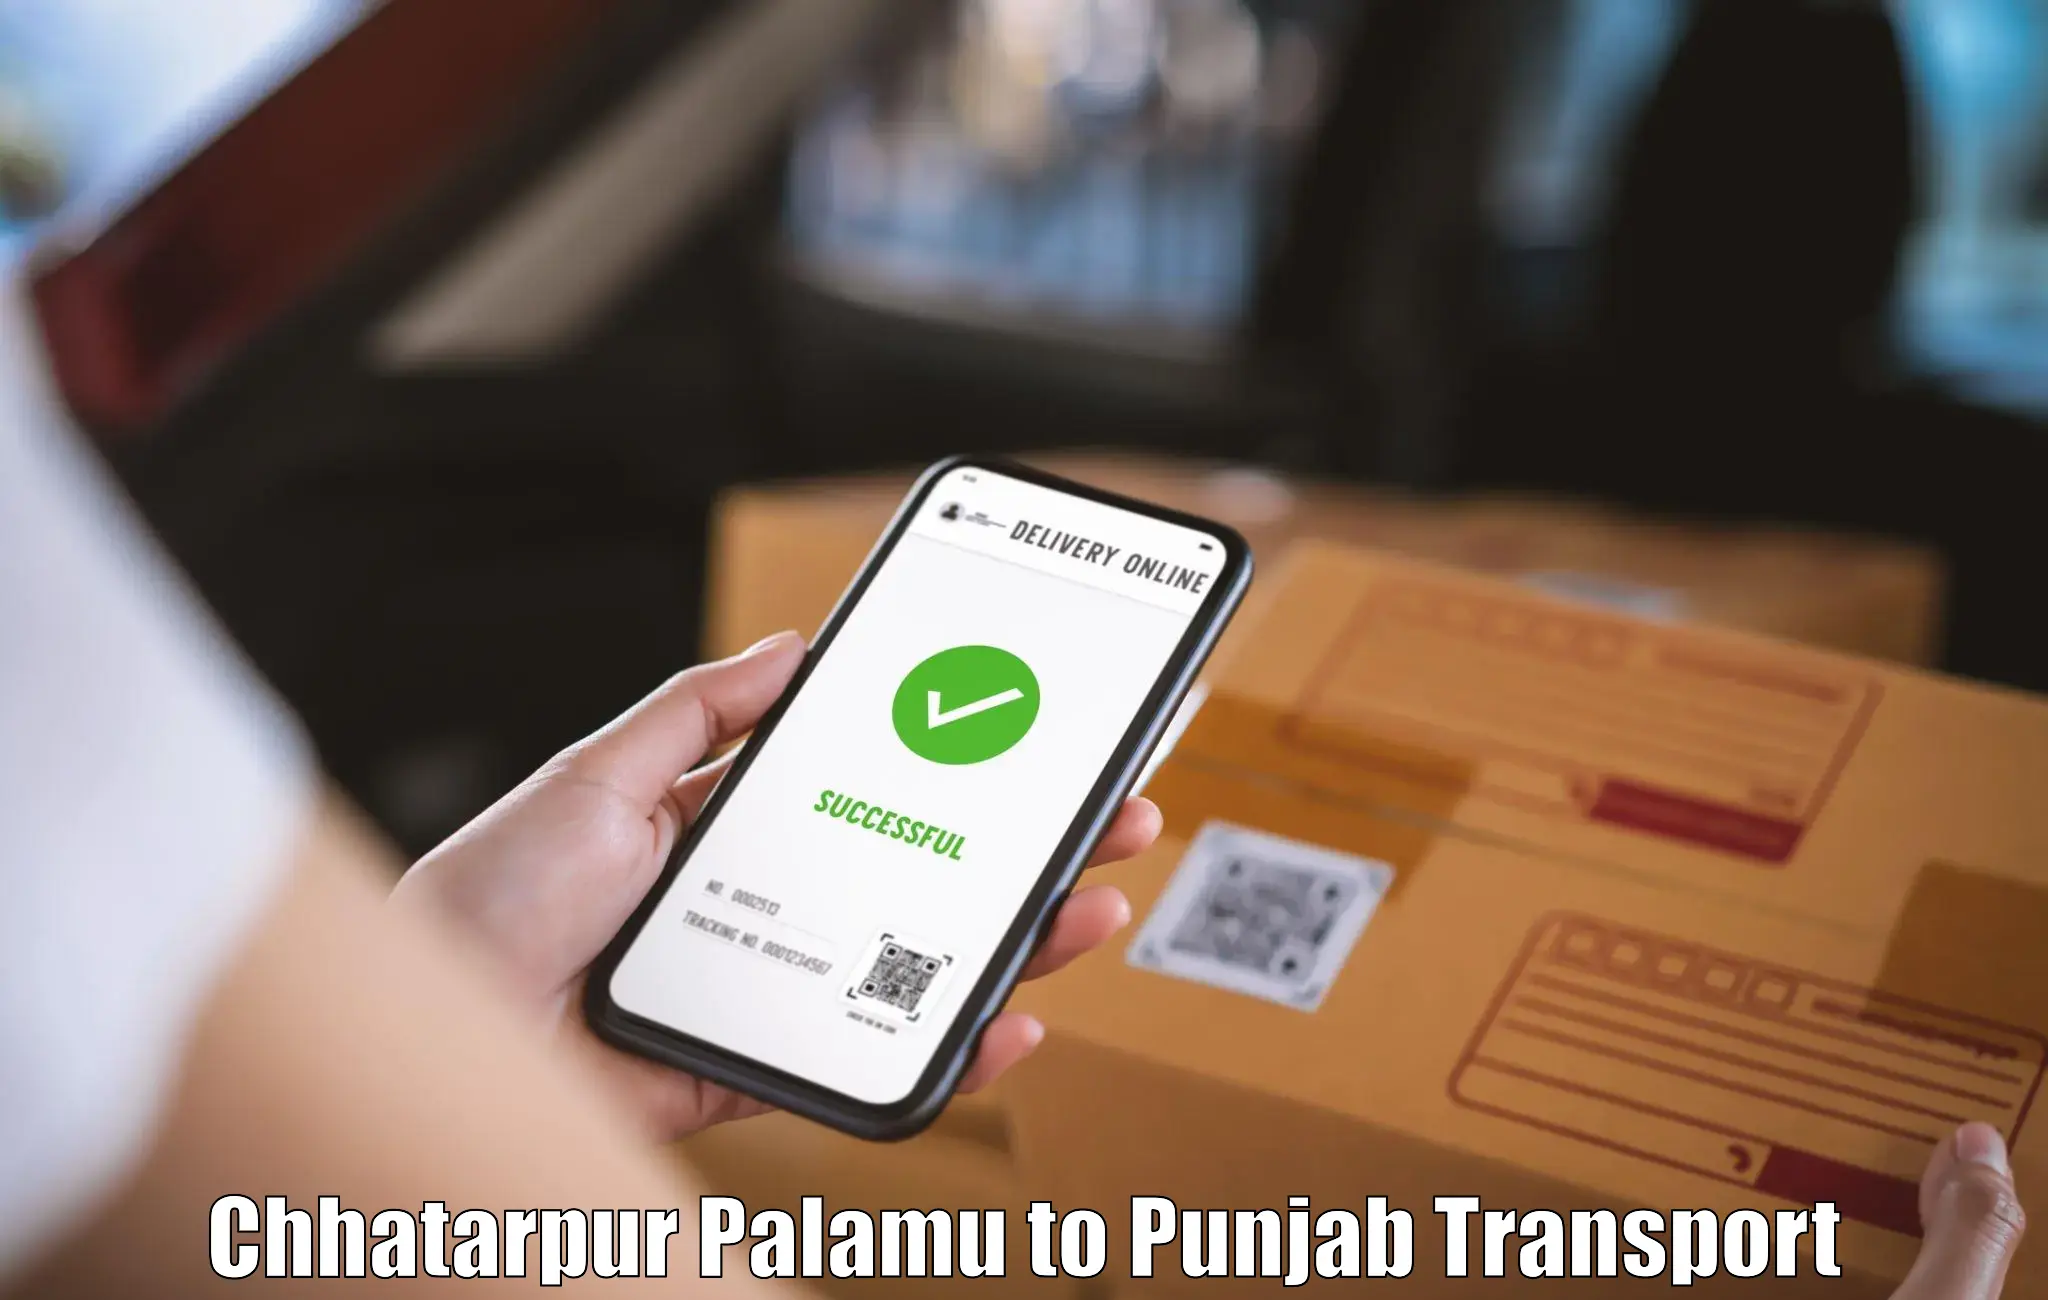 Nearest transport service Chhatarpur Palamu to Garhshankar